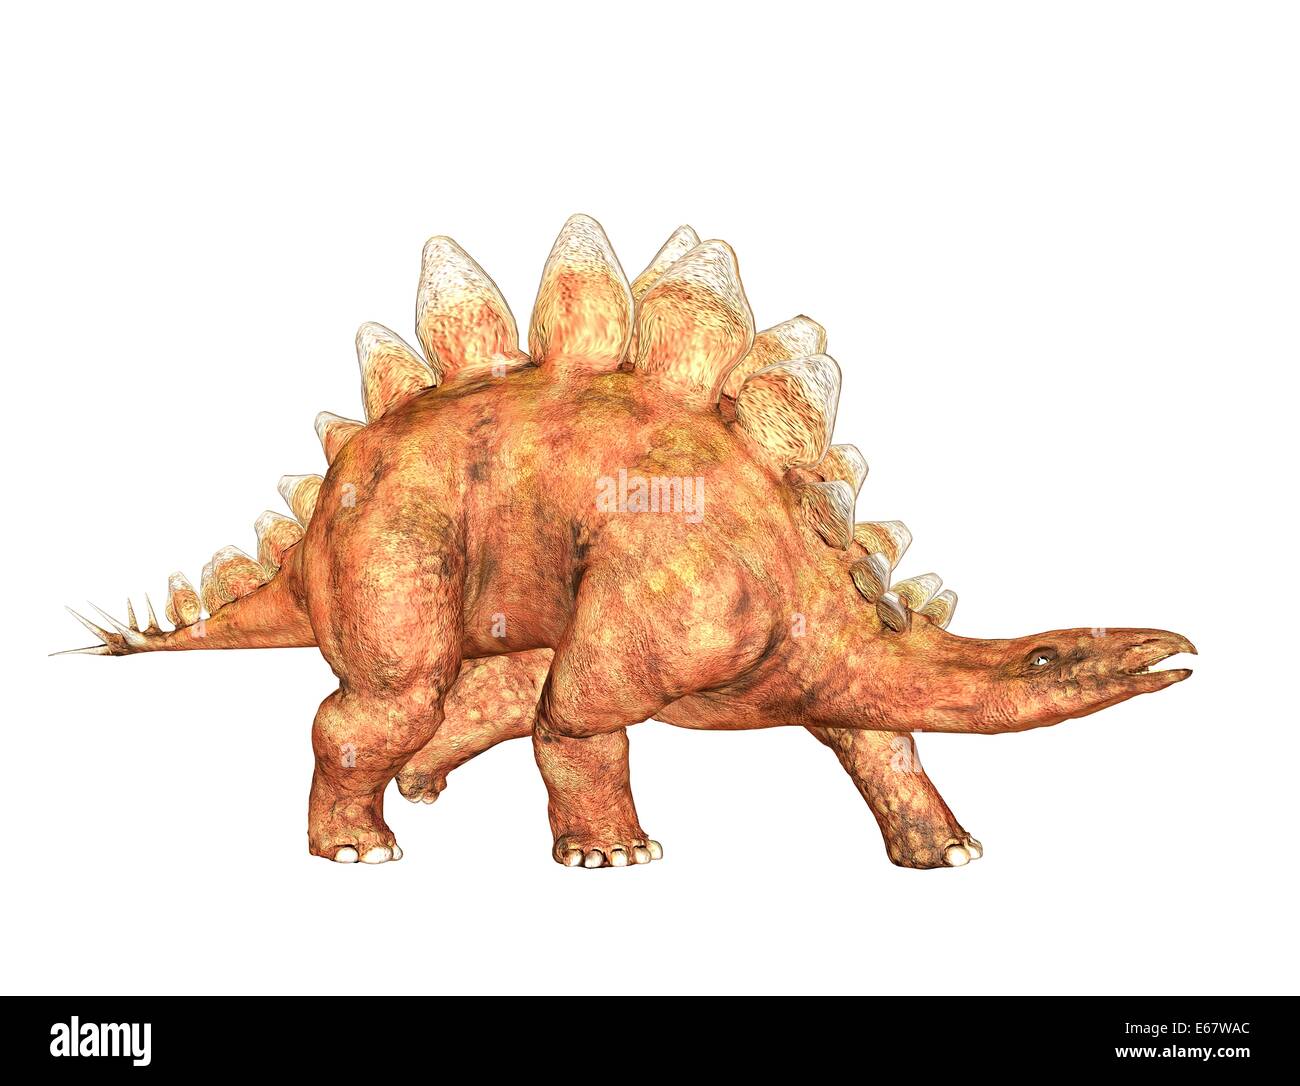 Dinosaurier Stegosaurus / dinosaur Stegosaurus Stock Photo - Alamy